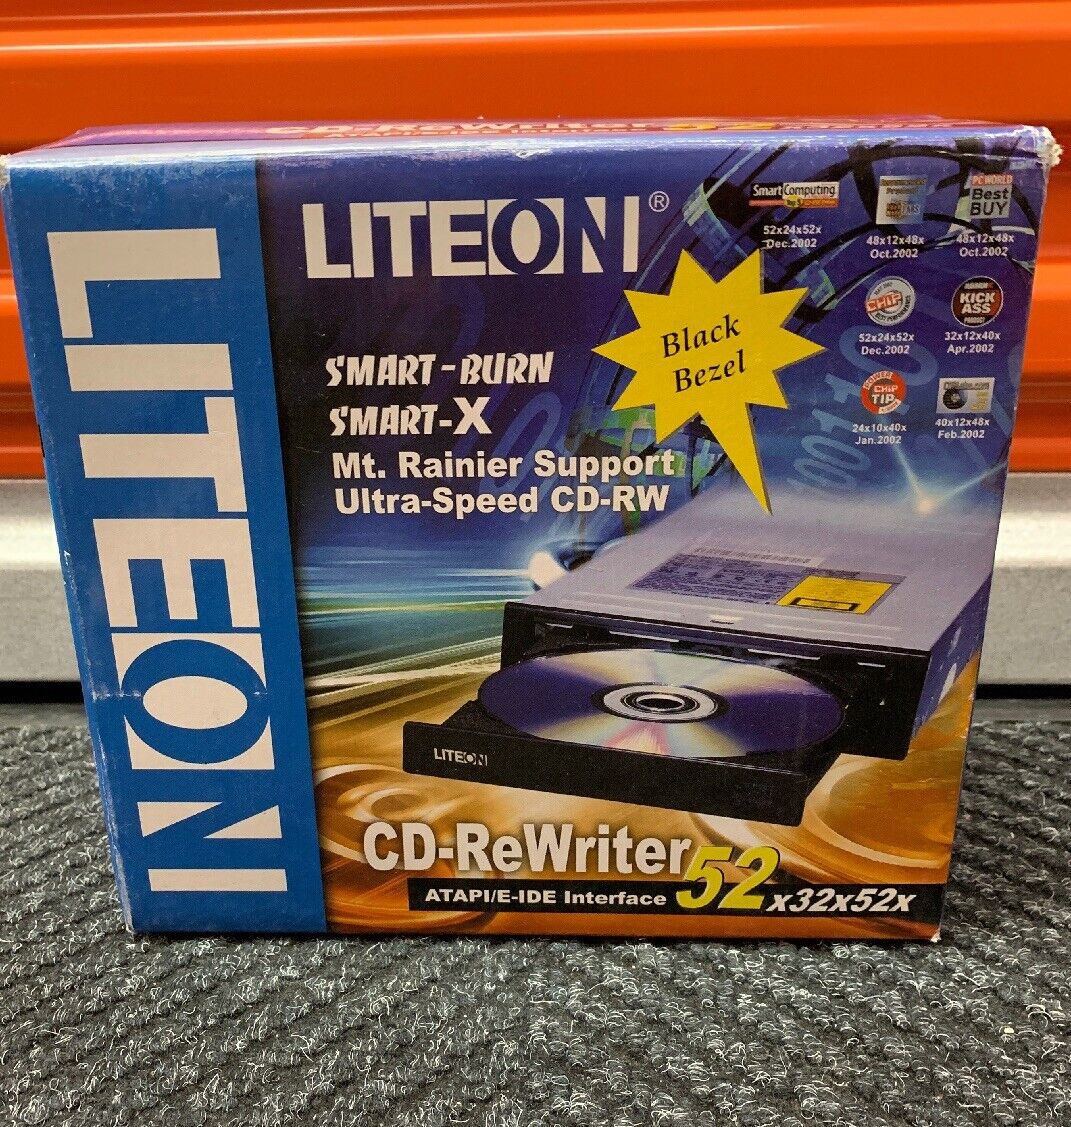 Liteon CD Writer 52 x 32 x 52 x